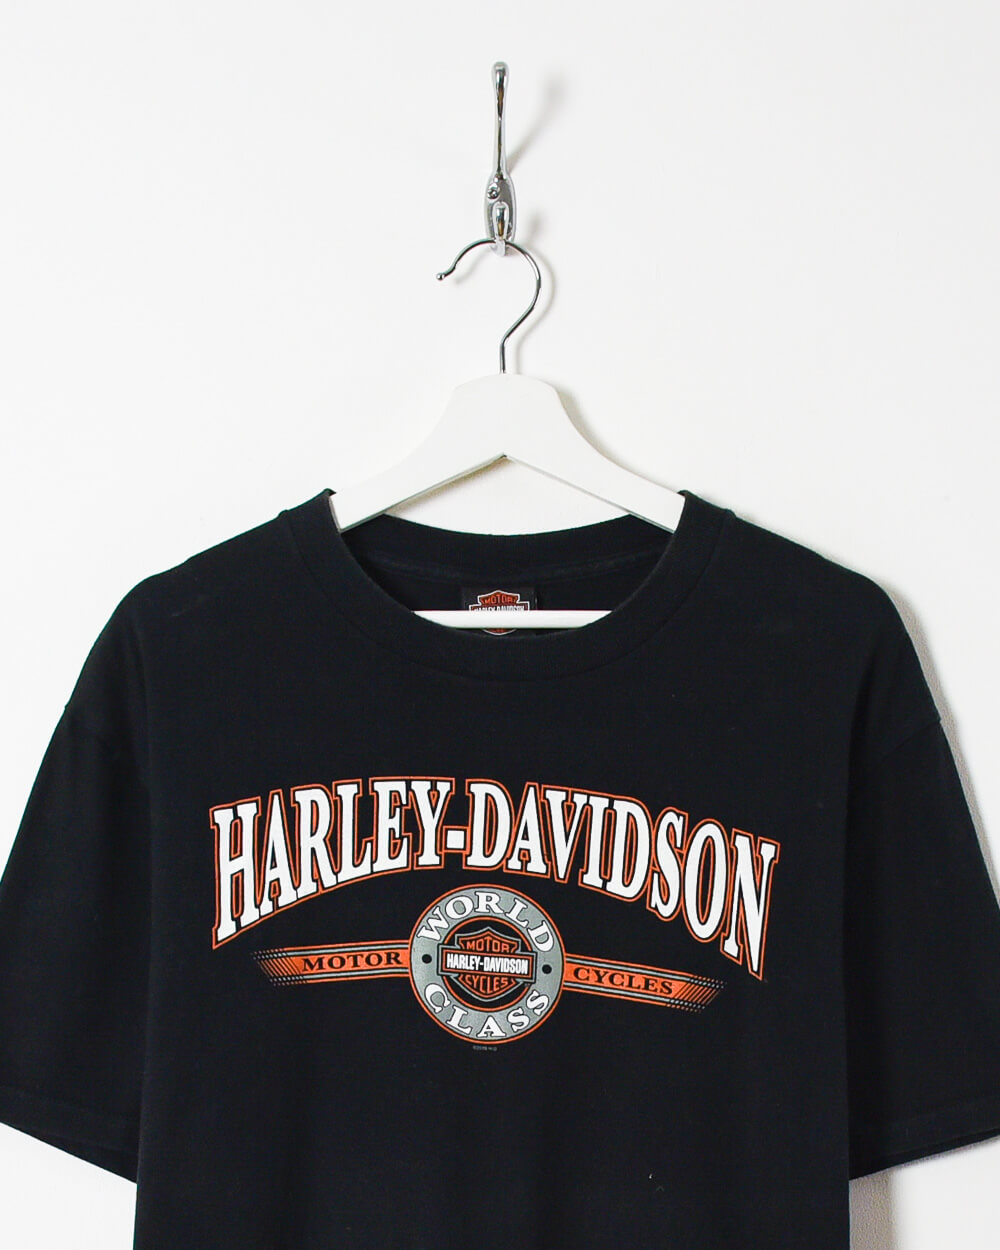 Black Harley-Davidson Motor Cycles World Class Orlando Florida USA T-Shirt - Large